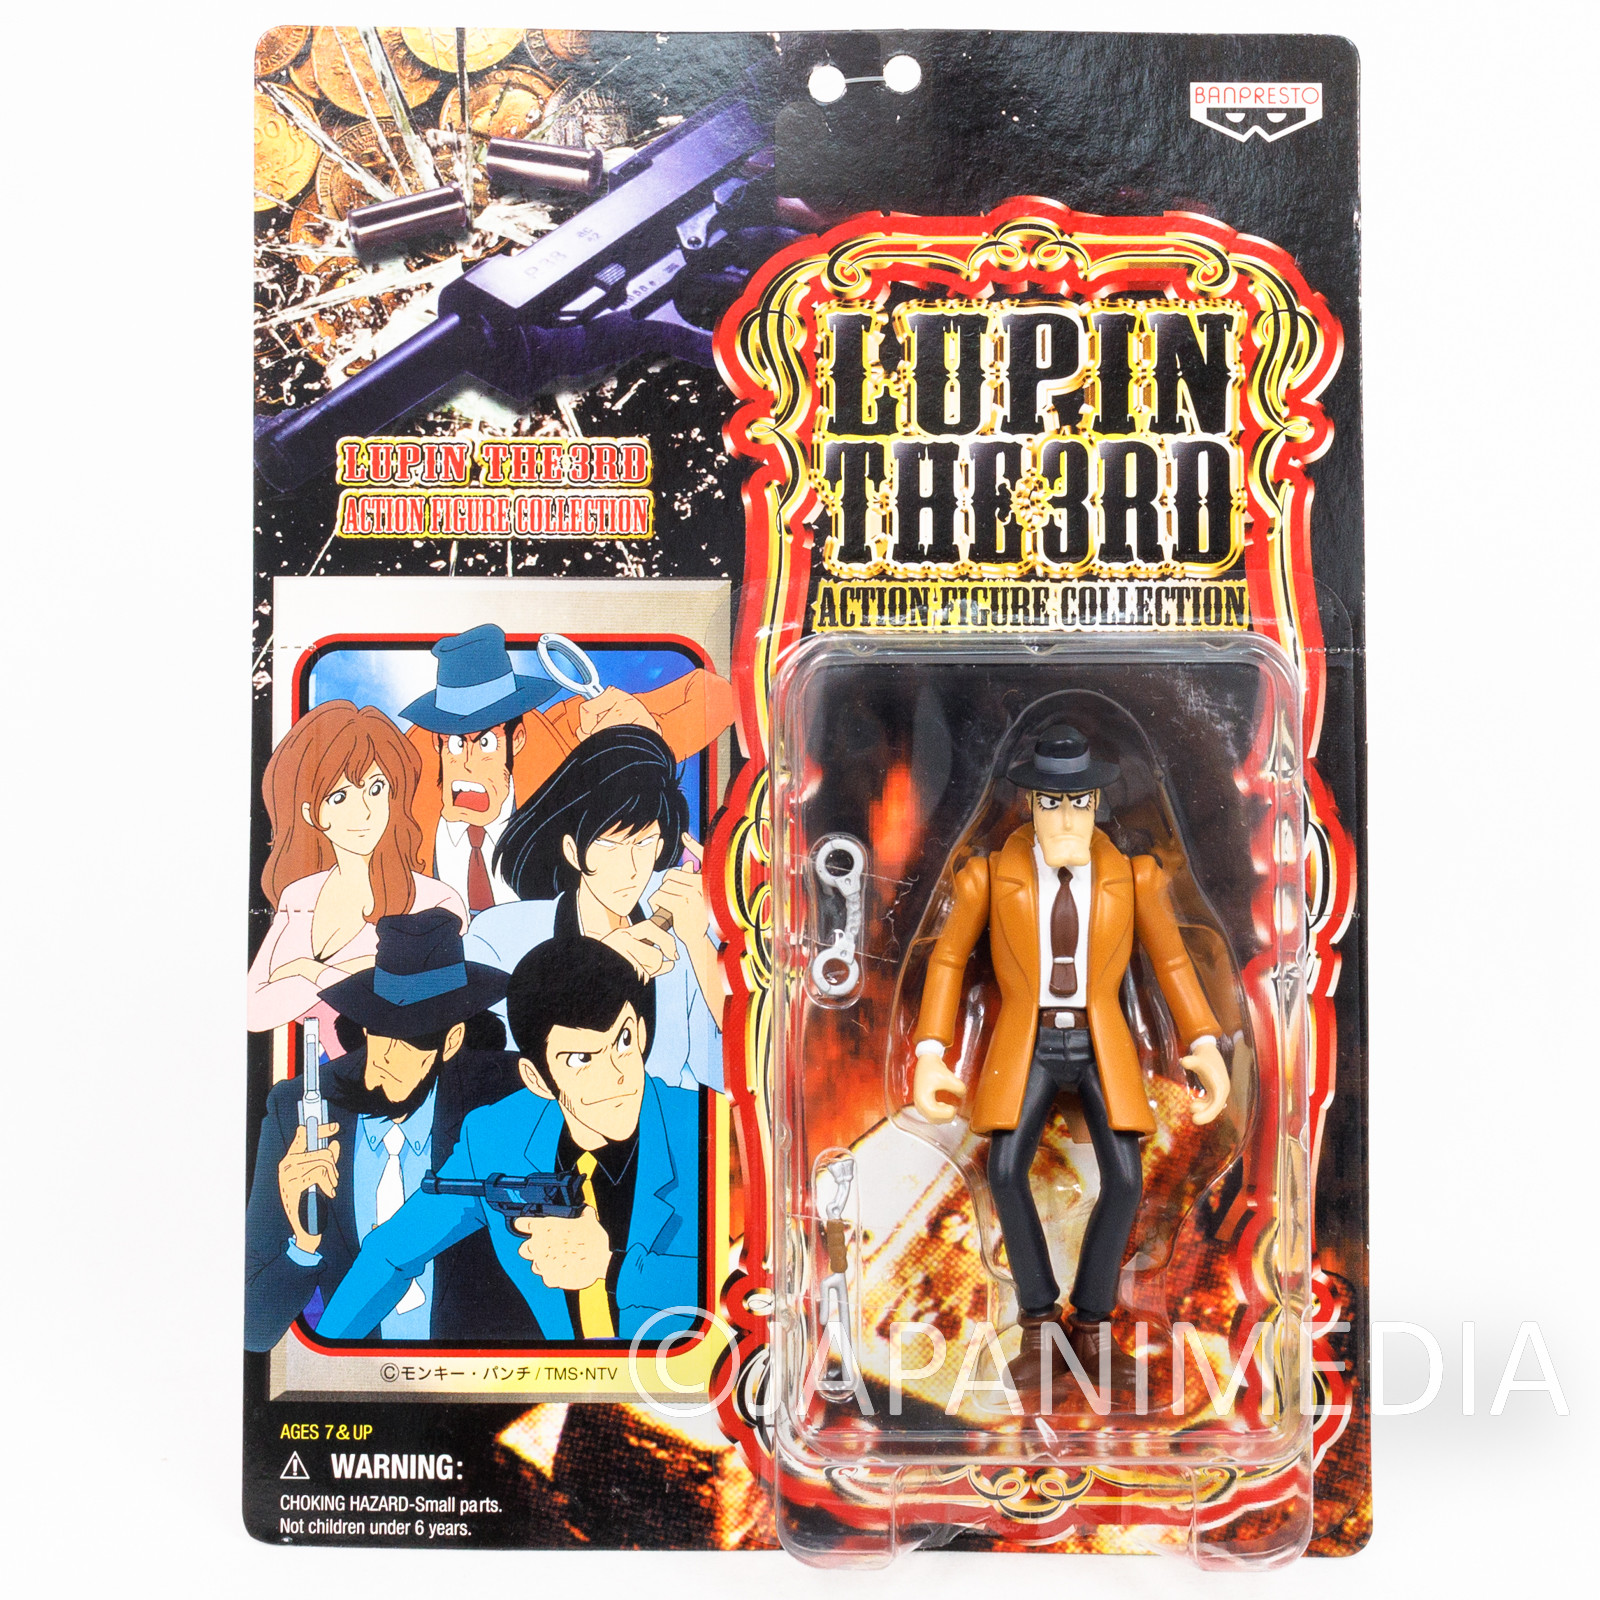 Lupin the Third (3rd) Zenigata Action Figure Collection Banpresto JAPAN